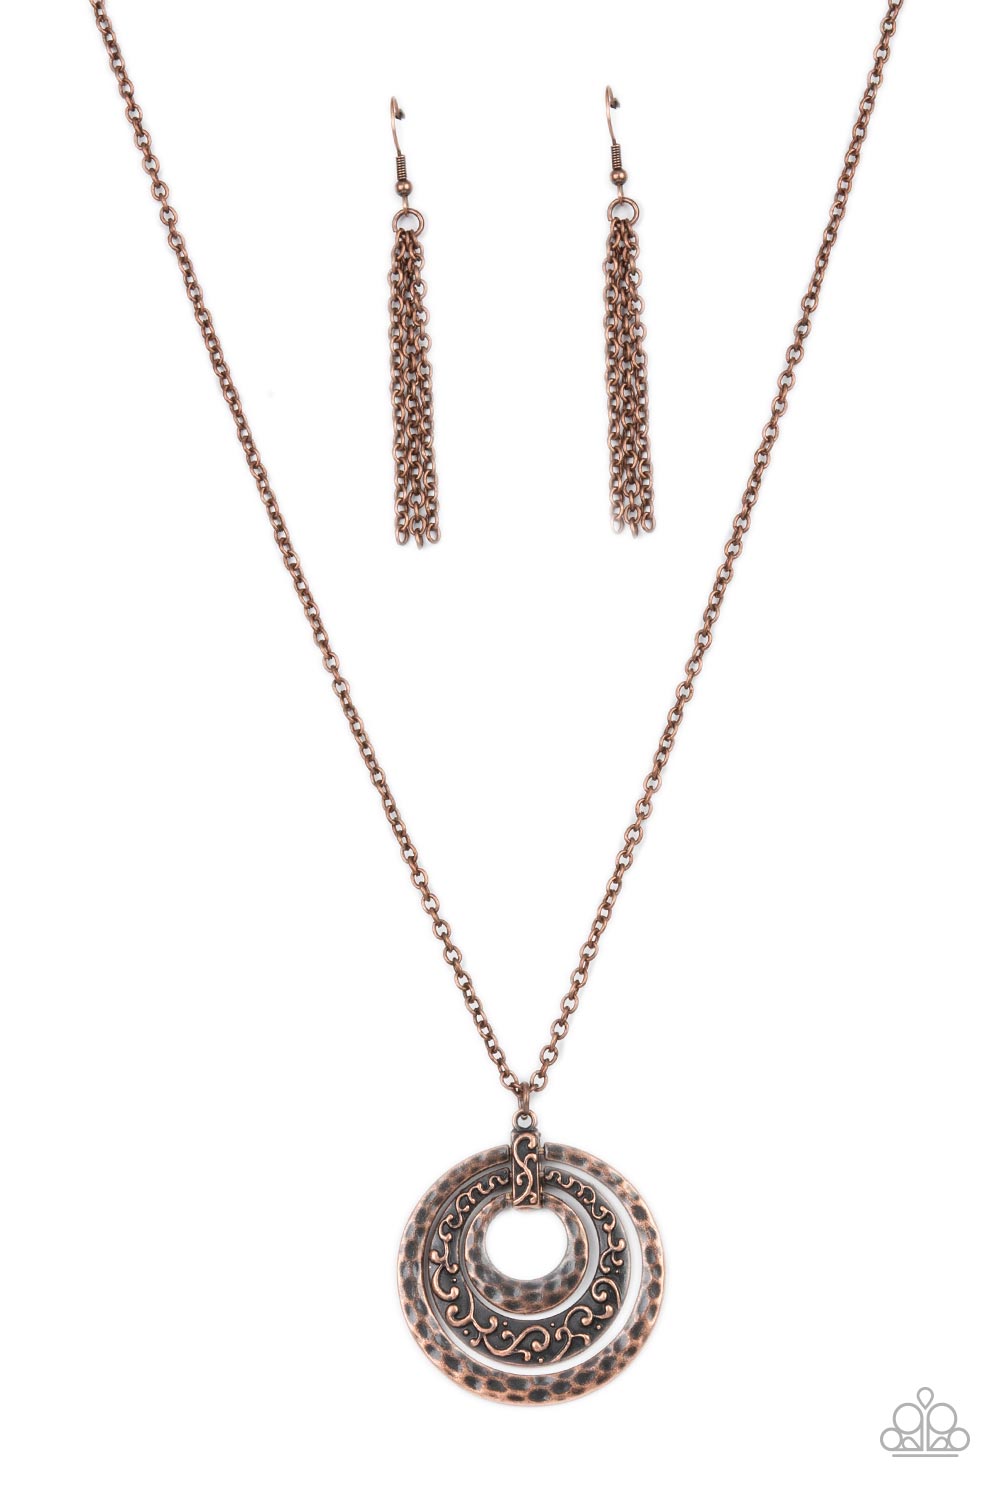 Totally Tulum - copper - Paparazzi necklace